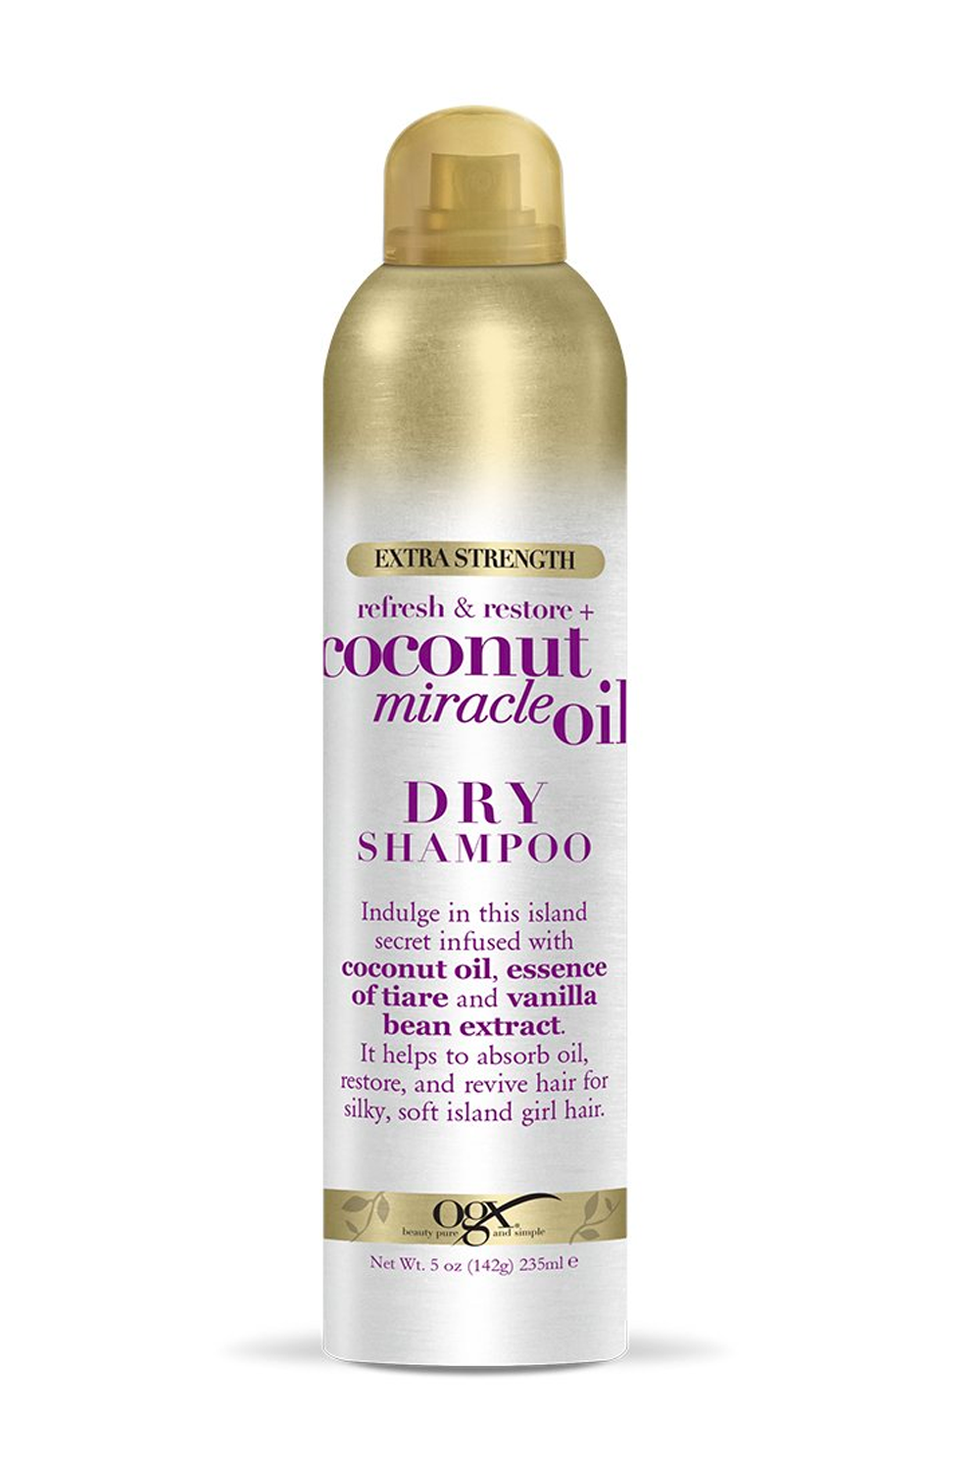 Ogx Extra Strength Refresh & Restore + Dry Shampoo